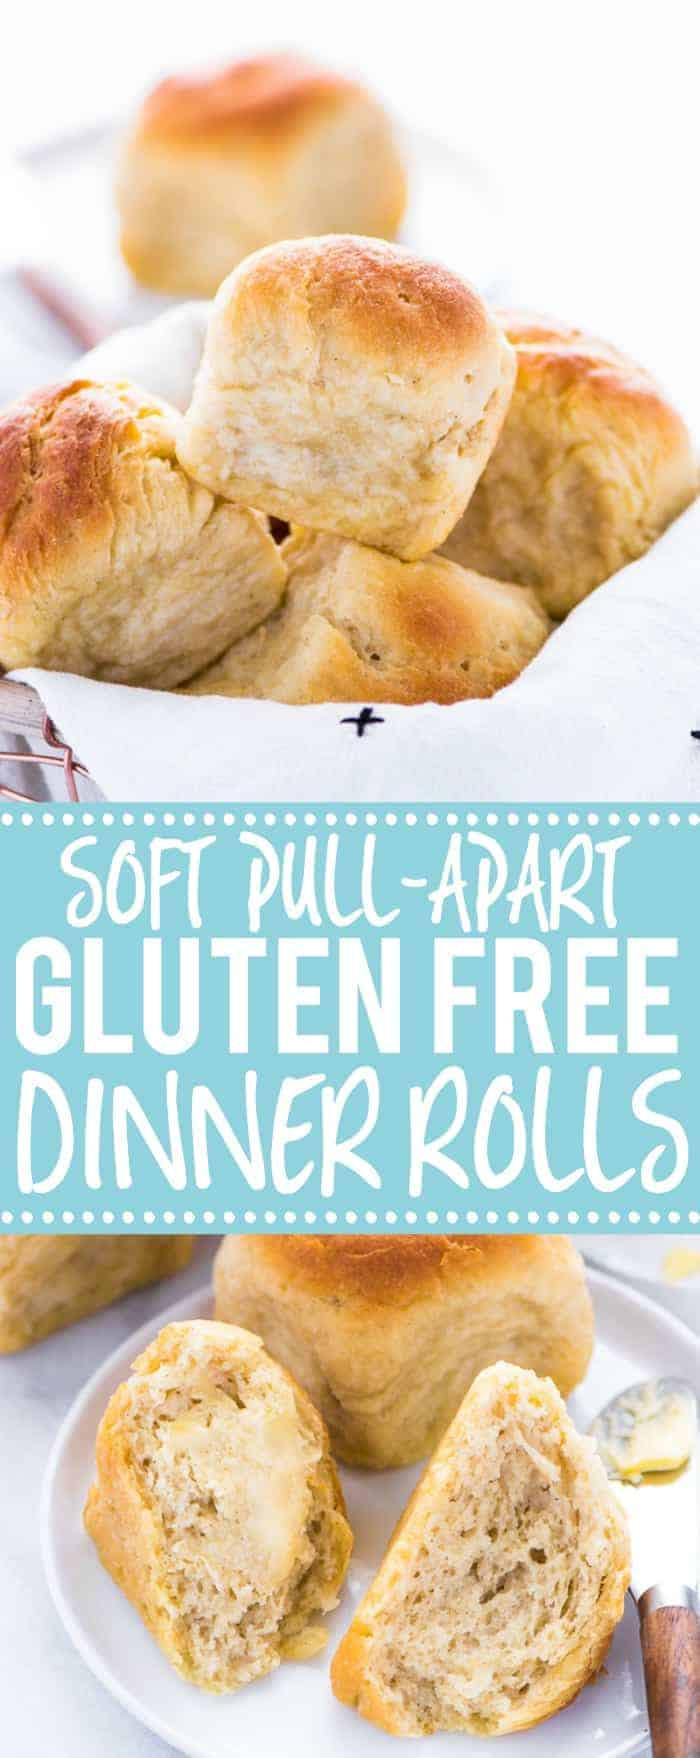 Gluten Free Dinner Roll Recipes
 The Best Easy Gluten Free Dinner Rolls What the Fork